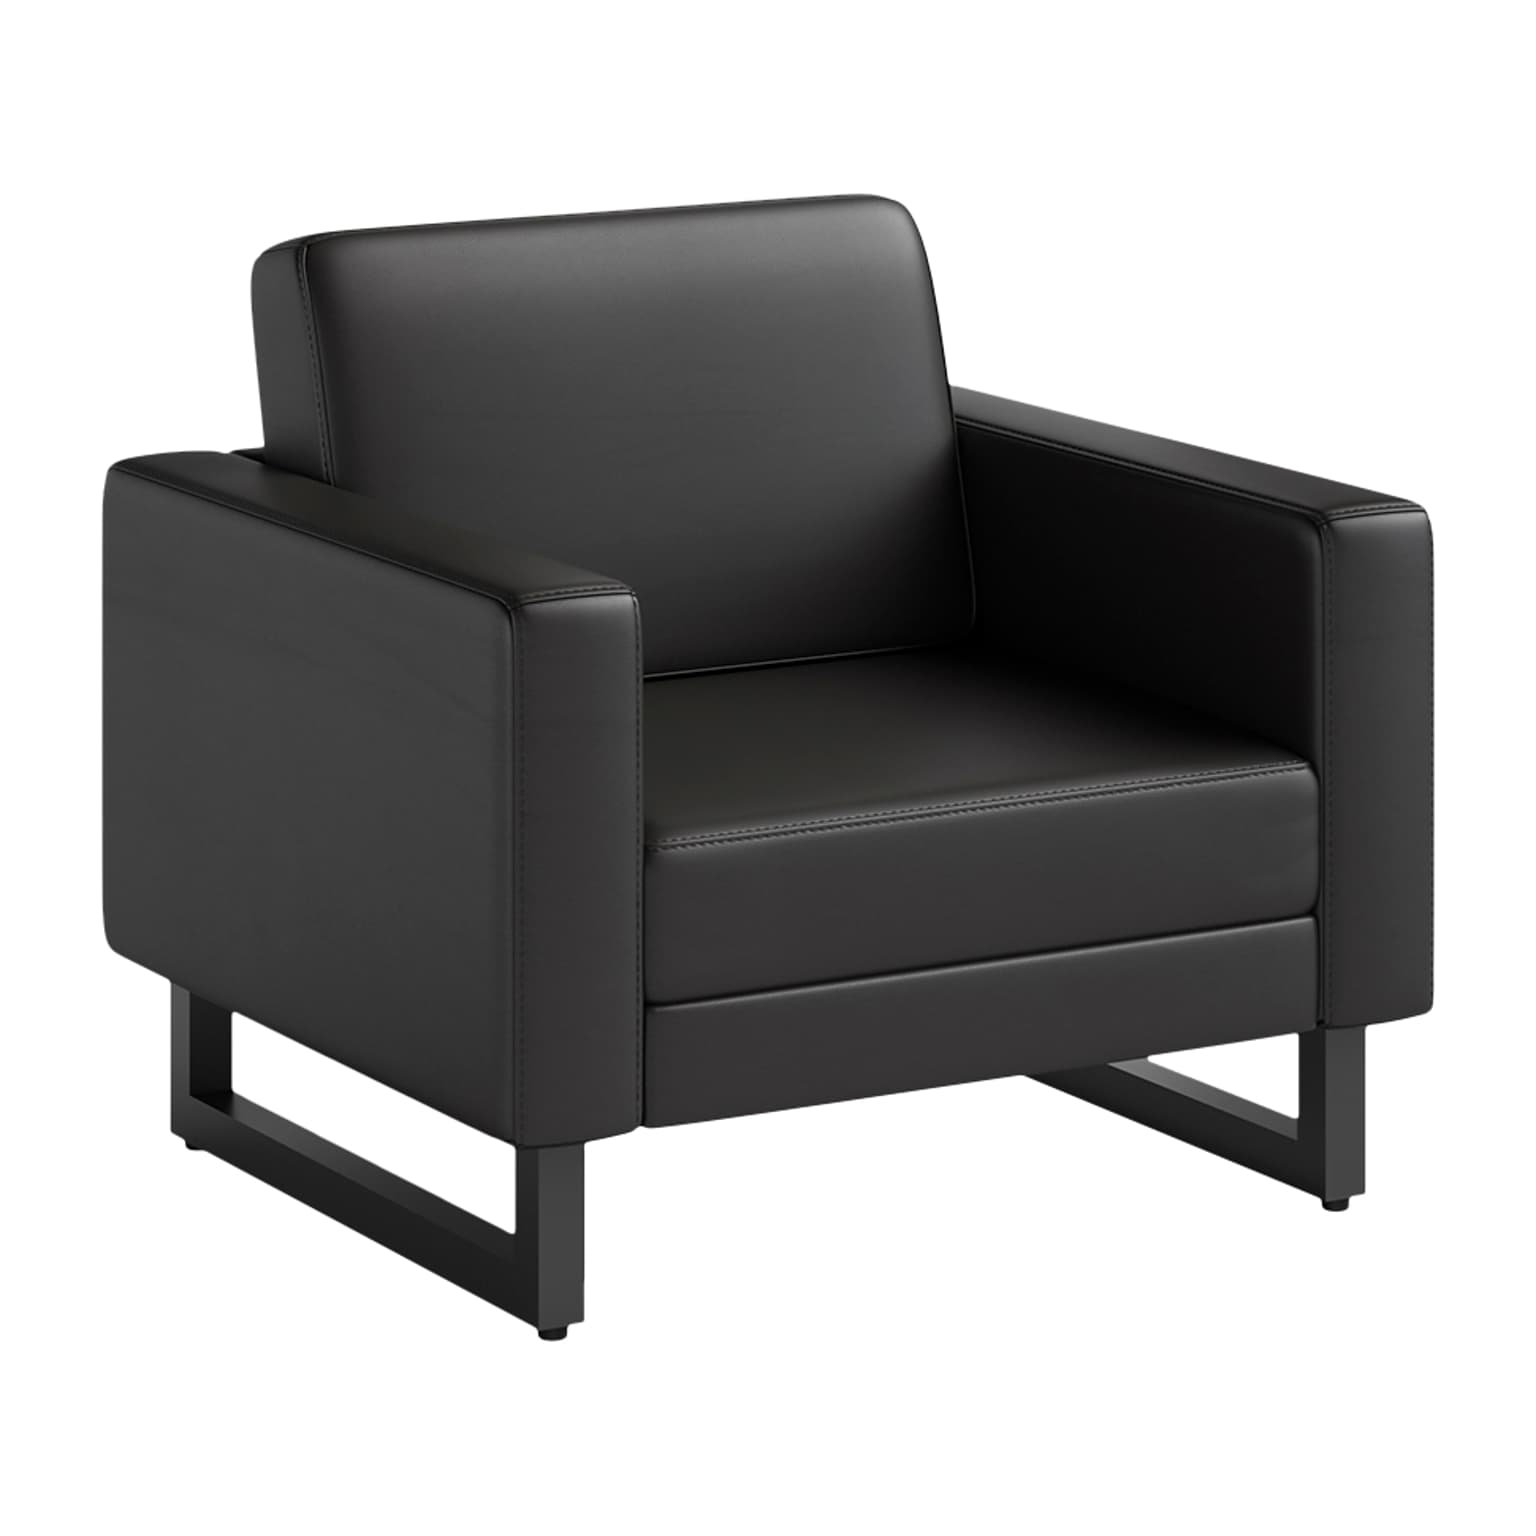 Safco Mirella Vinyl Lounge Chair, Black (1732MRL2BLKBL)